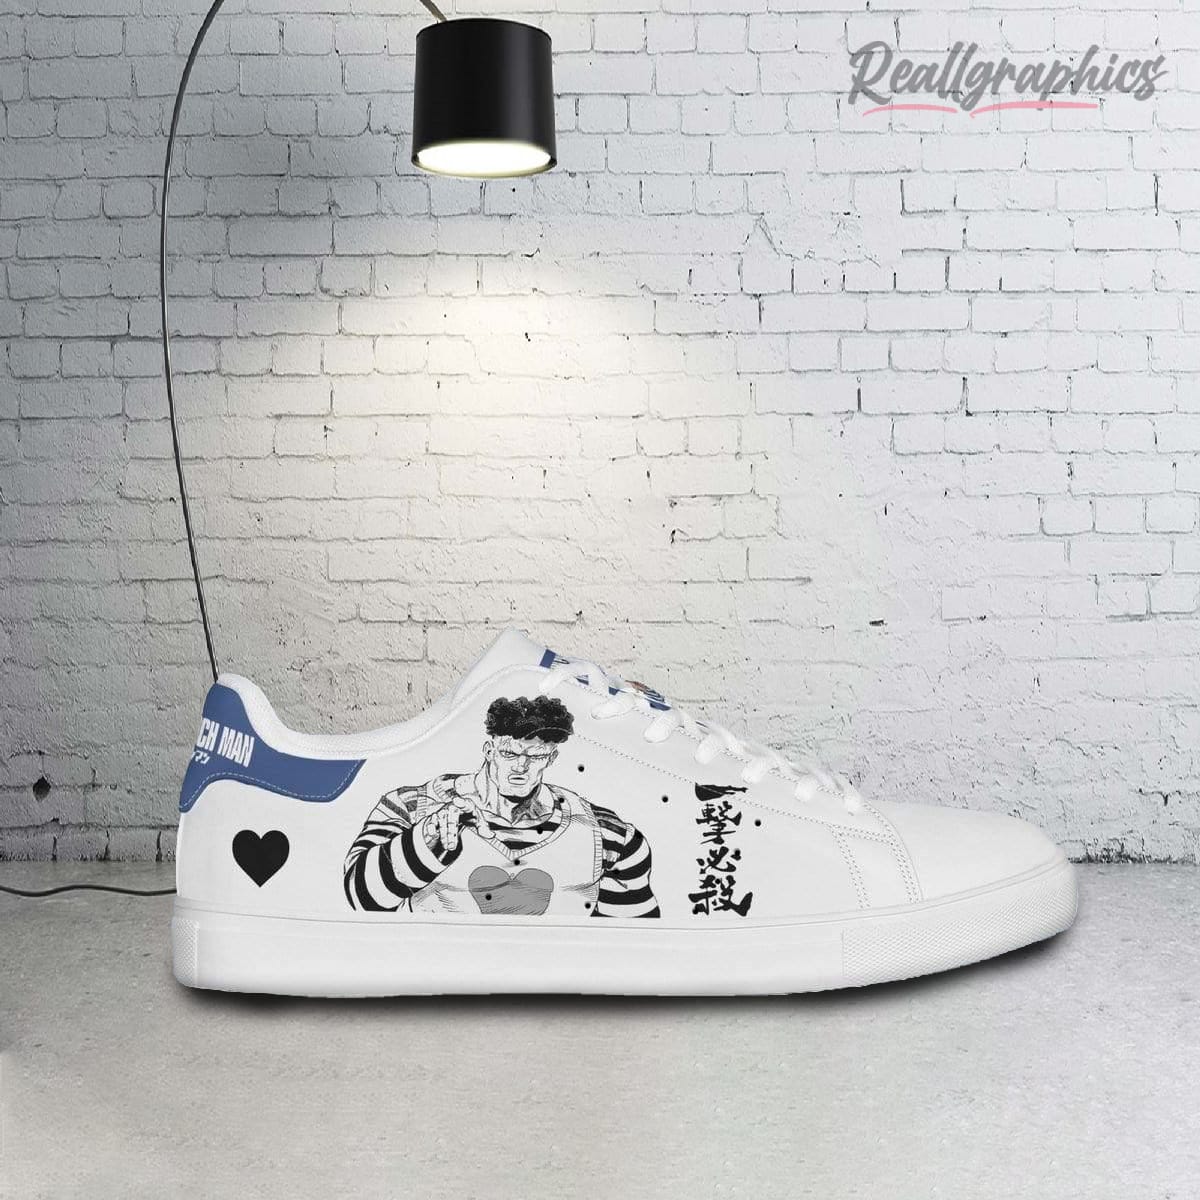 Puri Puri Prisoner Sneakers Custom One Punch Man Anime Stan Smith Shoes -  Reallgraphics